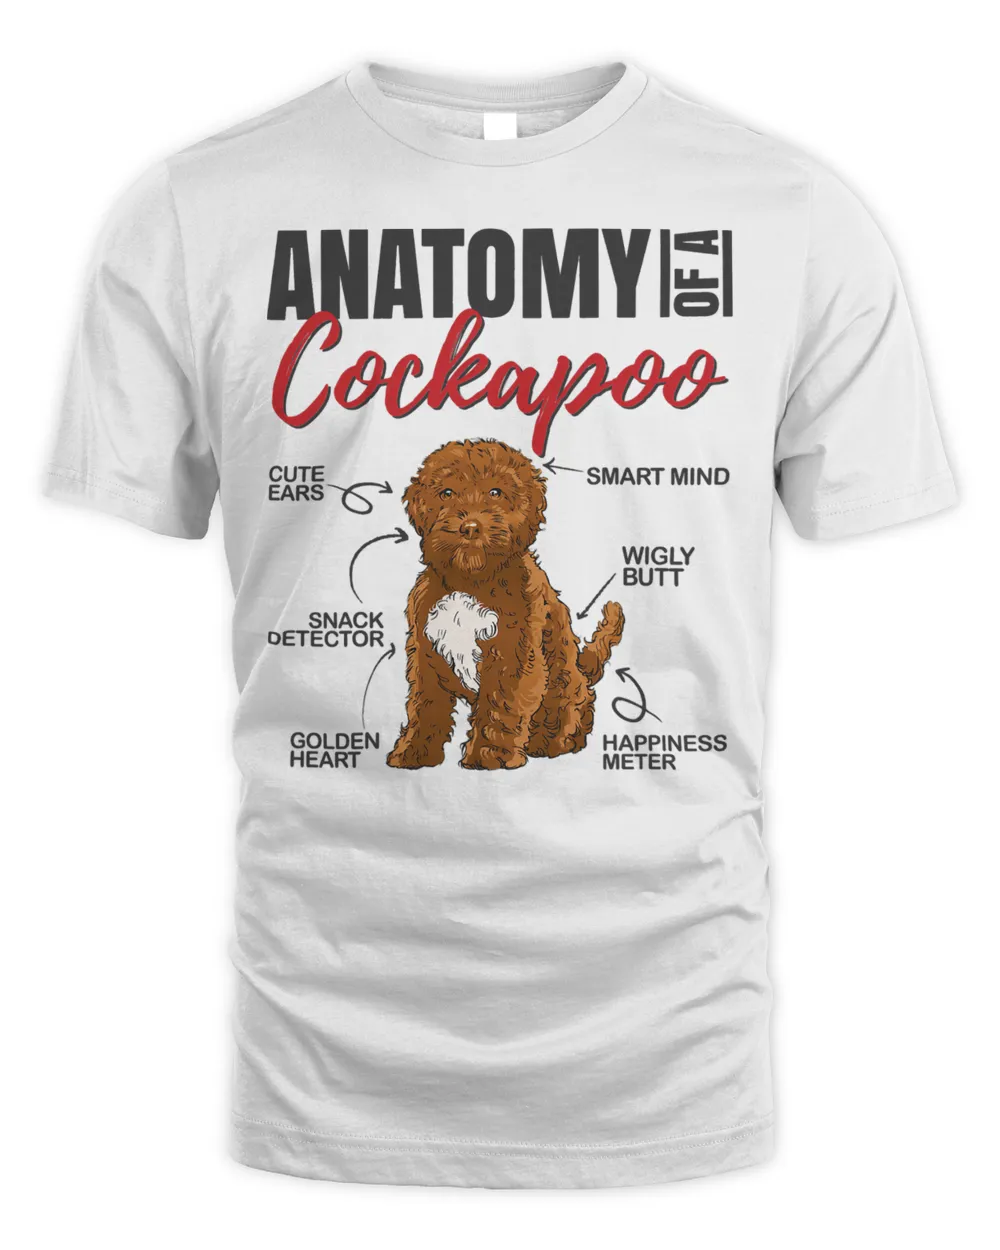 Anatomy of a Cockapoo